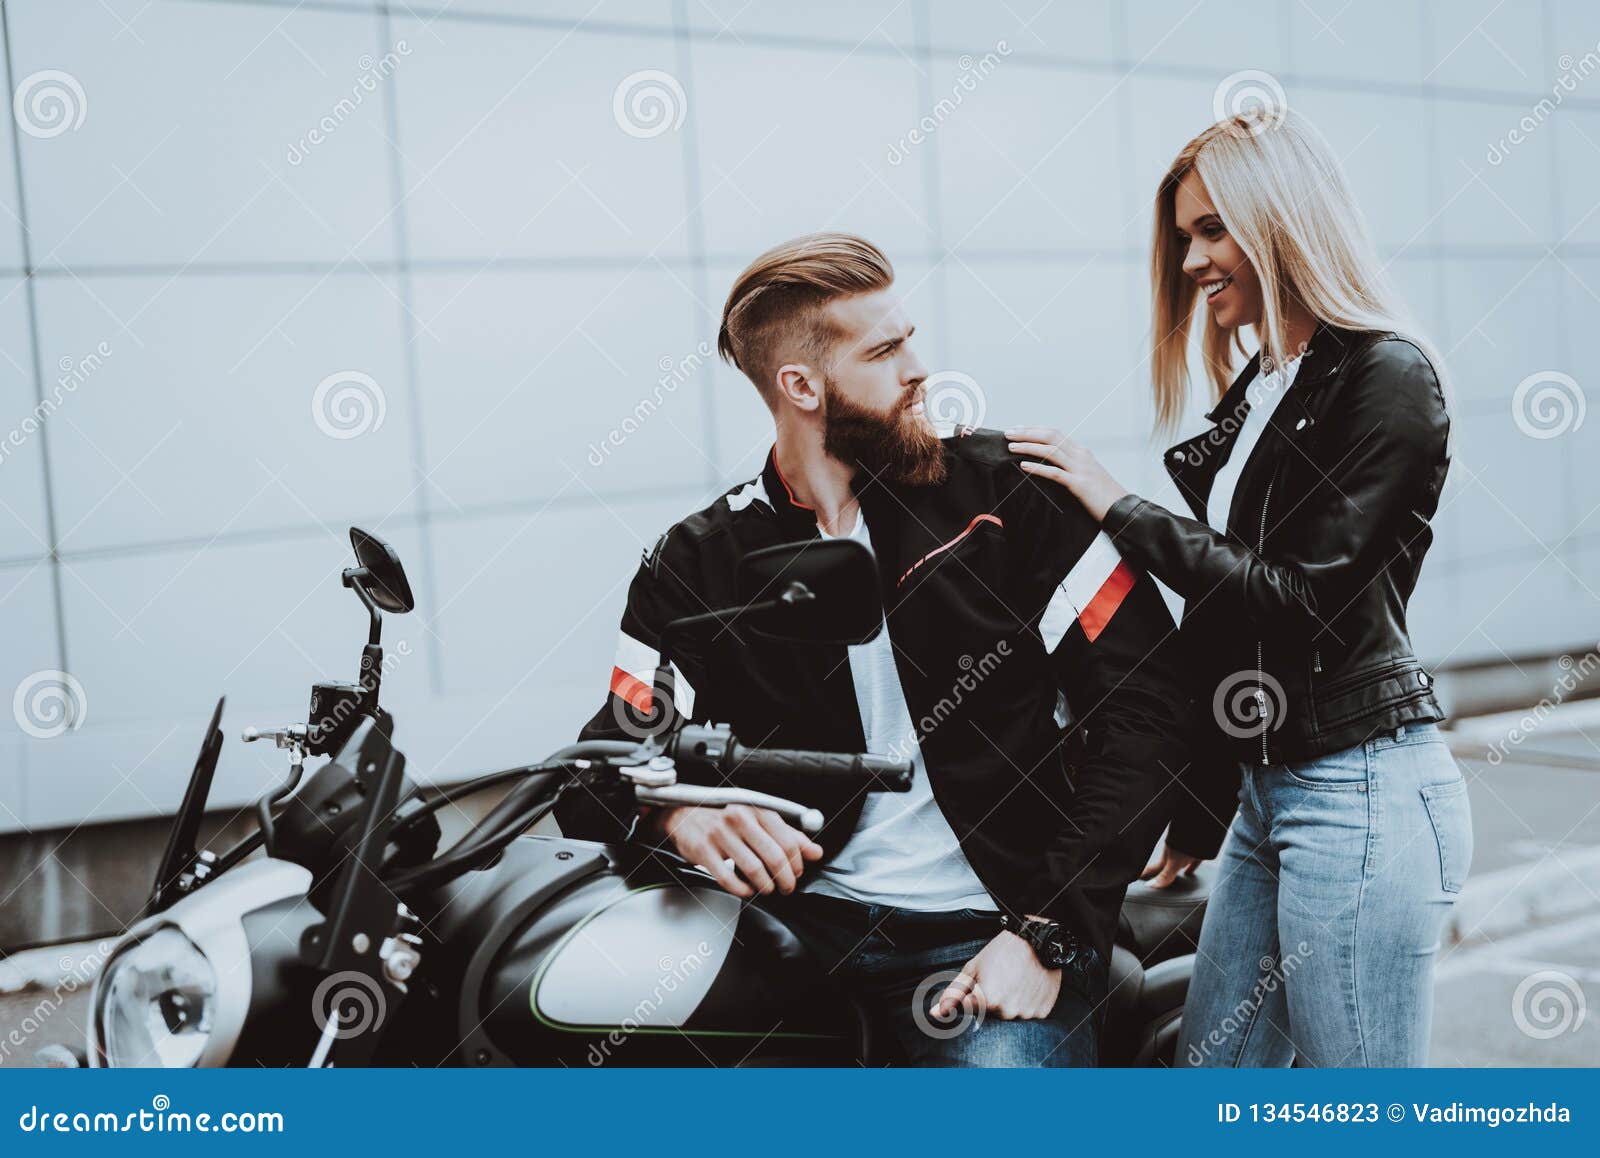 [Image: man-women-going-ride-bikers-concept-man-...546823.jpg]